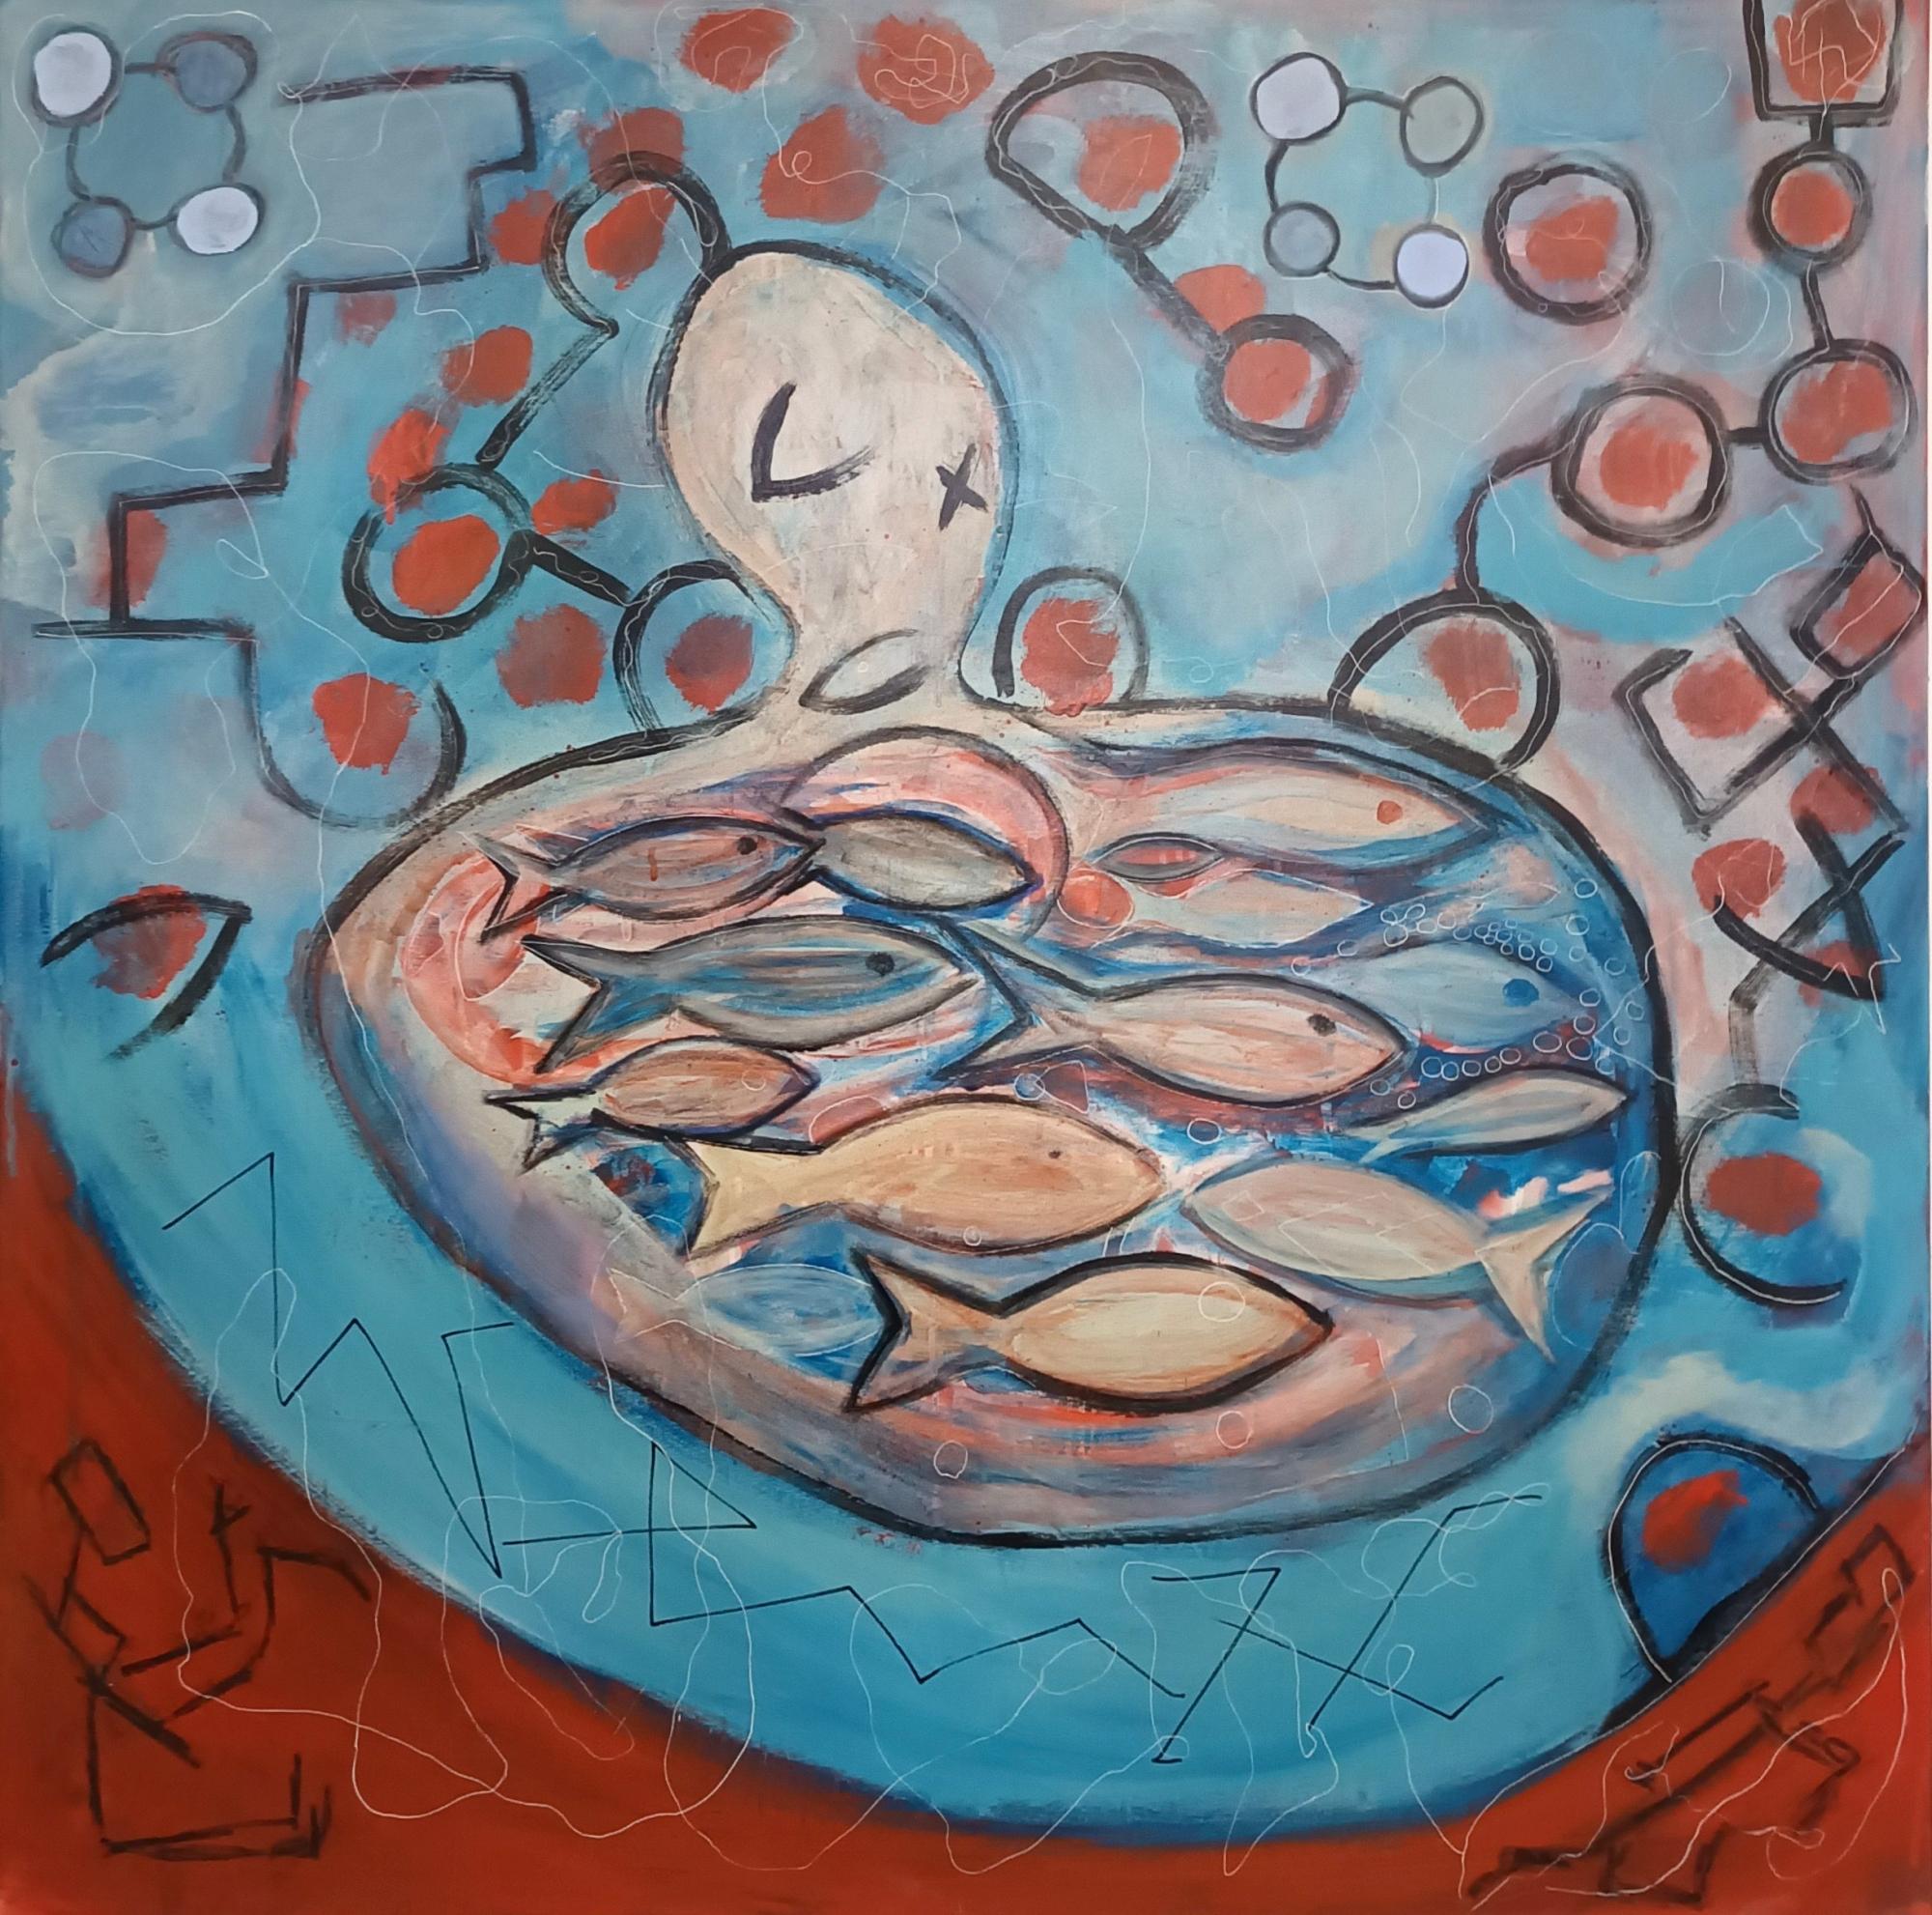 Translated title: "The sea inside".

Acrylic paint on canvas. 

